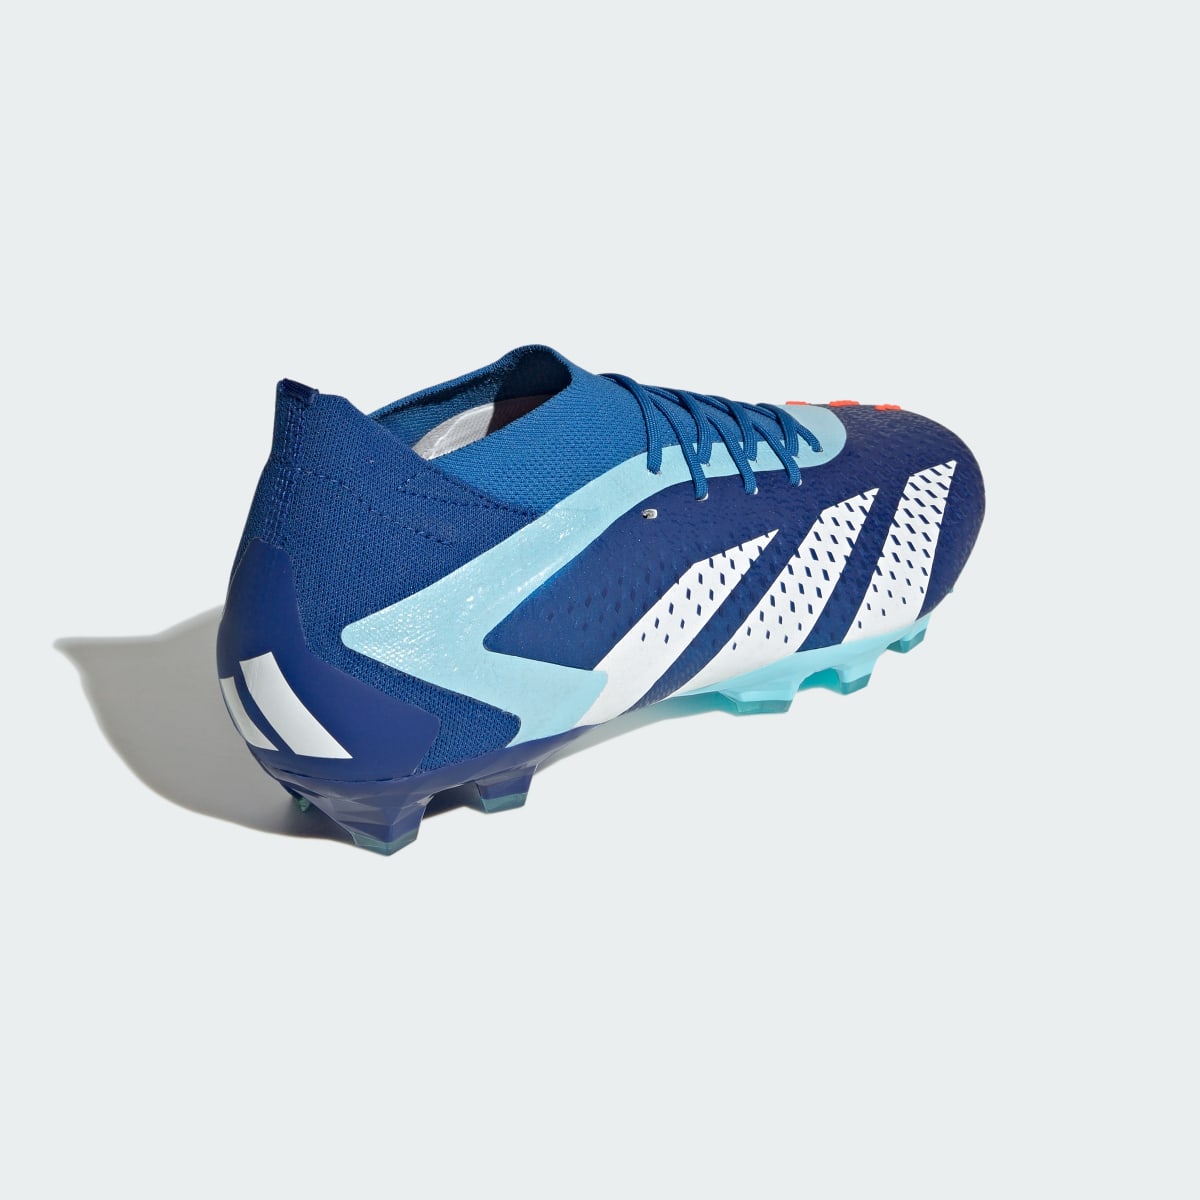 Adidas Predator Accuracy.1 Artificial Grass Soccer Cleats. 9